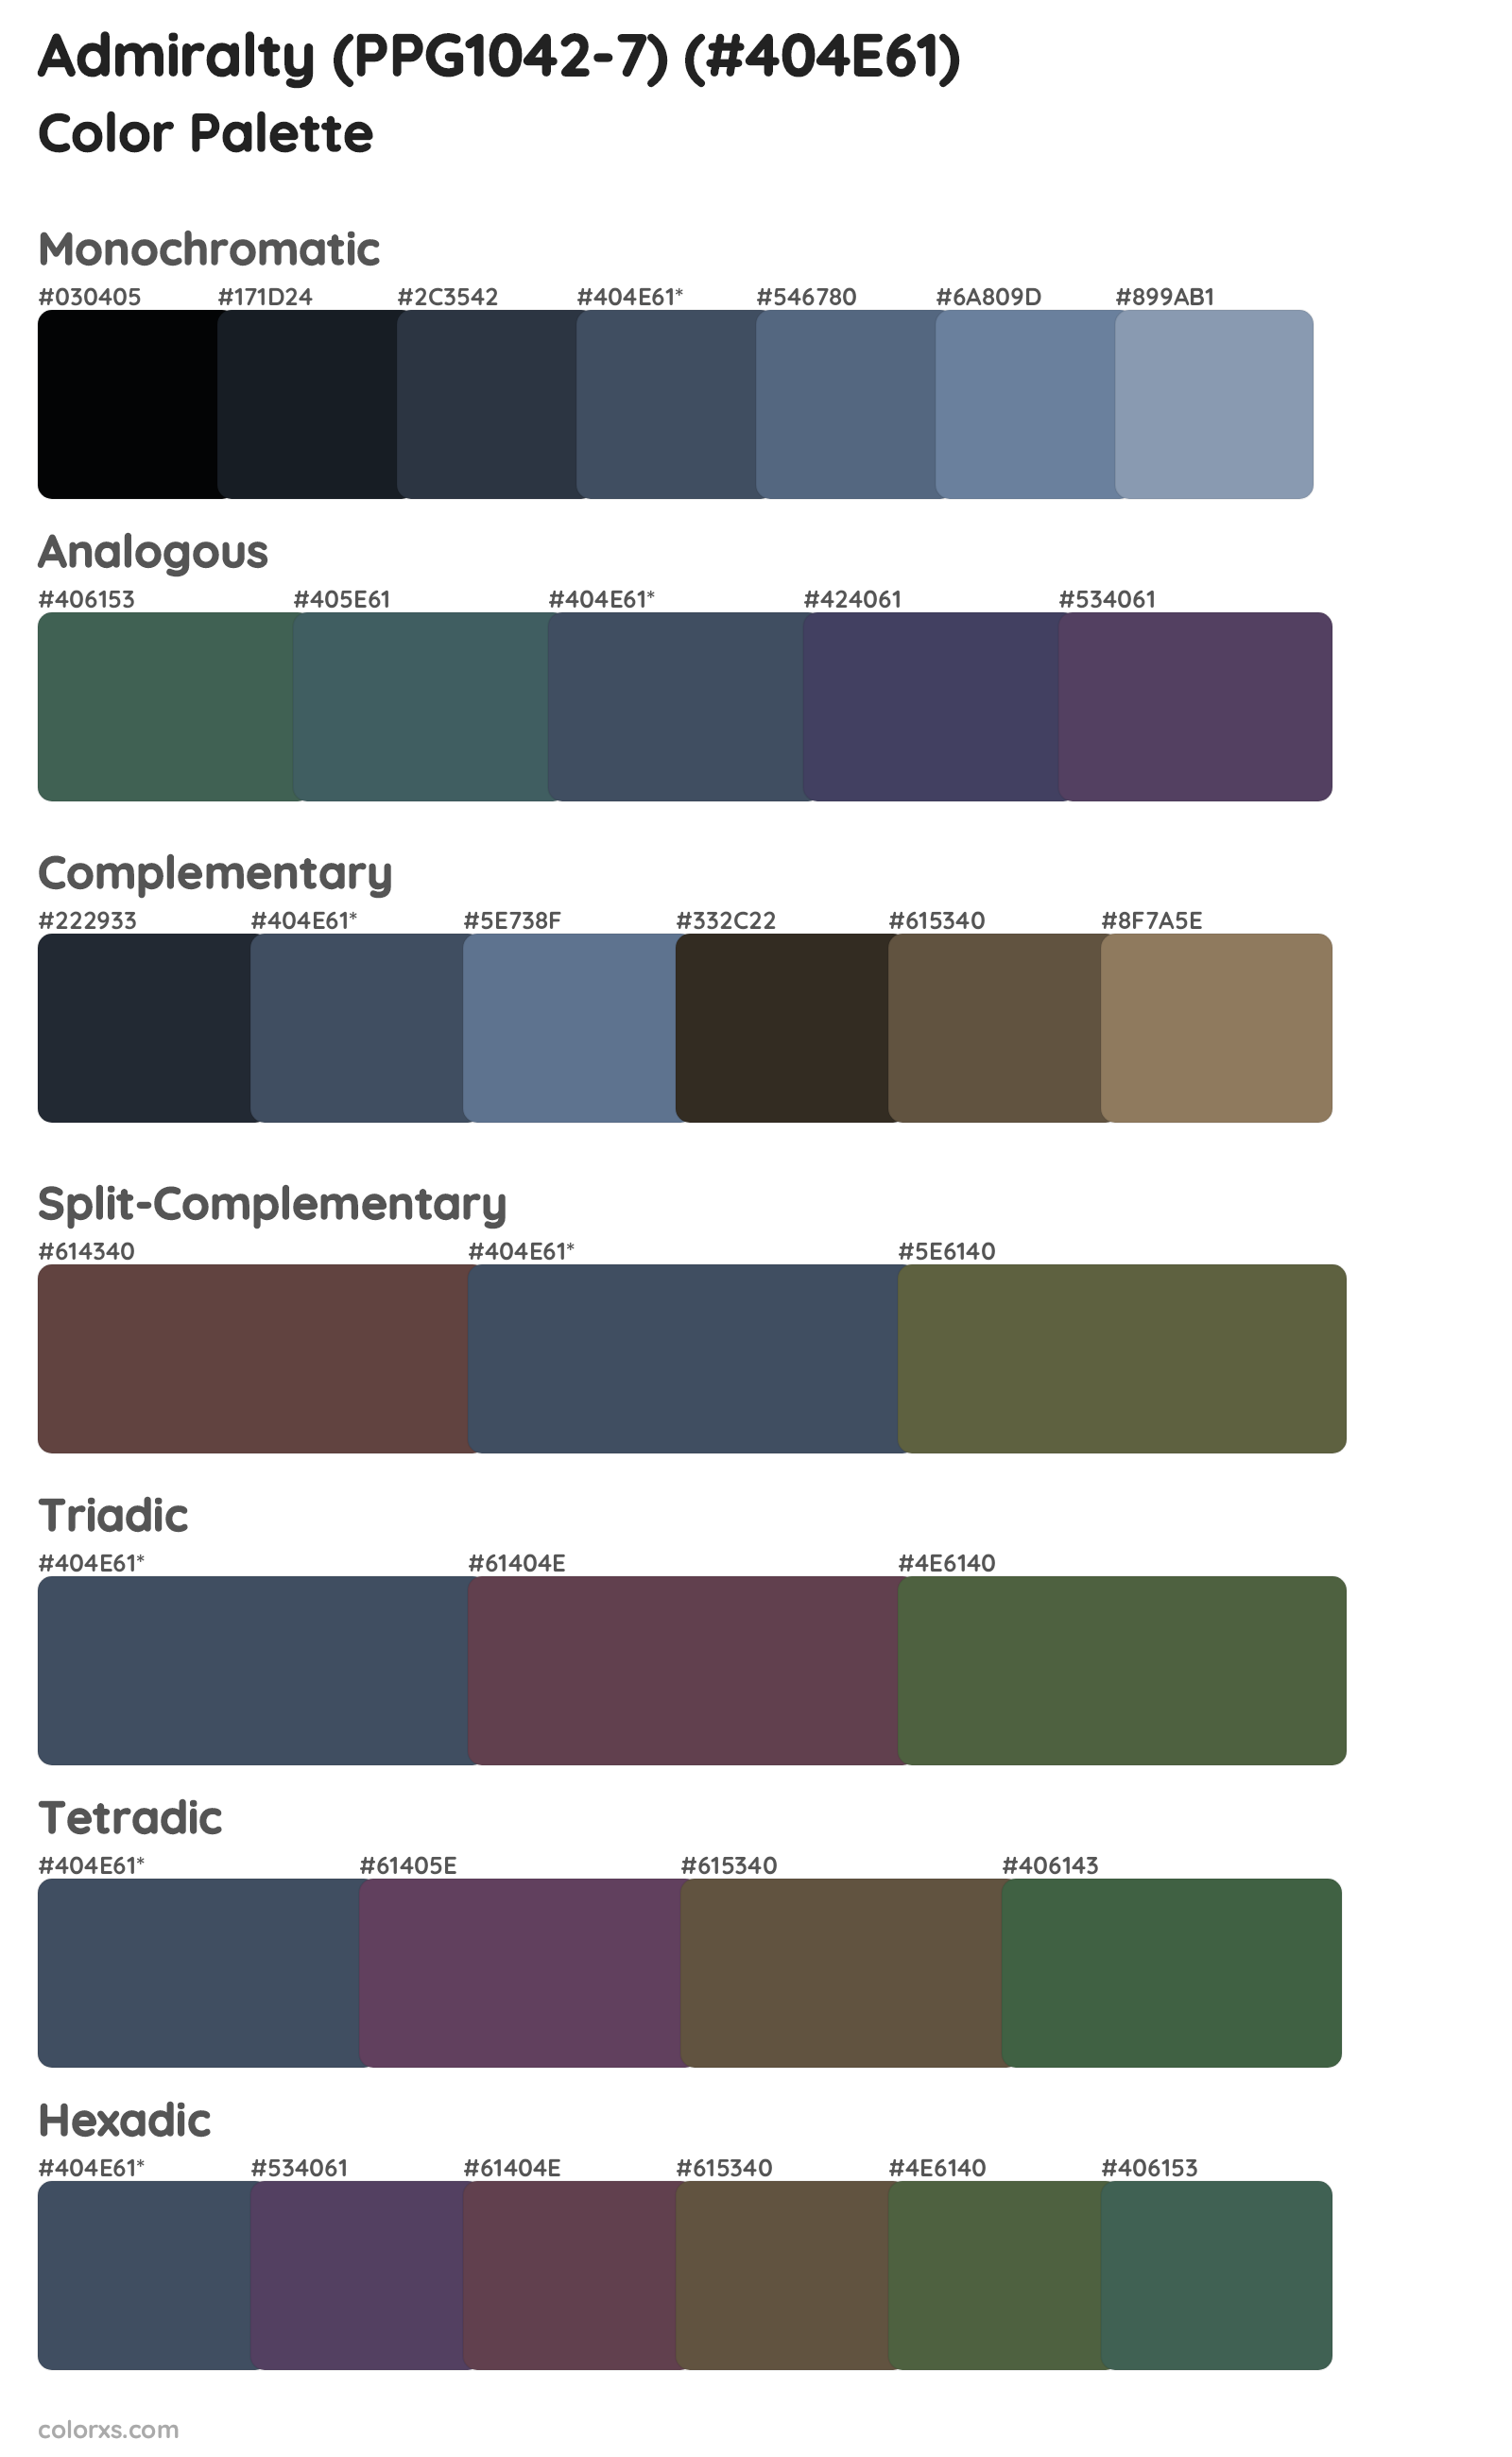 Admiralty (PPG1042-7) Color Scheme Palettes